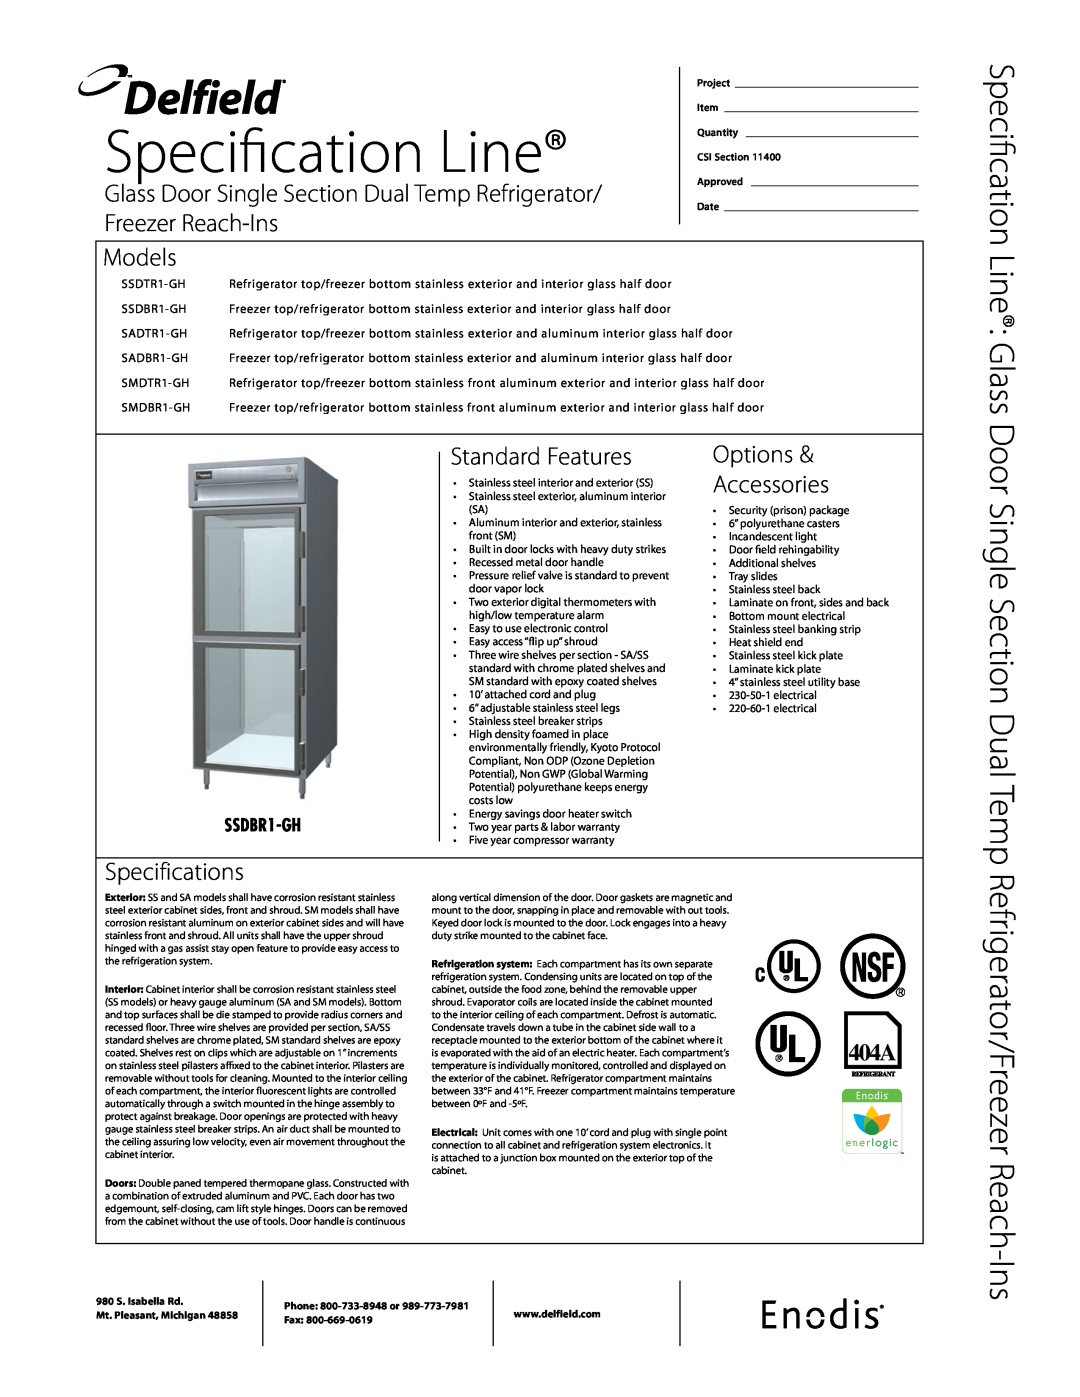 Delfield SSDBR1-GH specifications Specification Line, Delfield, Glass Door Single Section Dual Temp Refrigerator, Models 